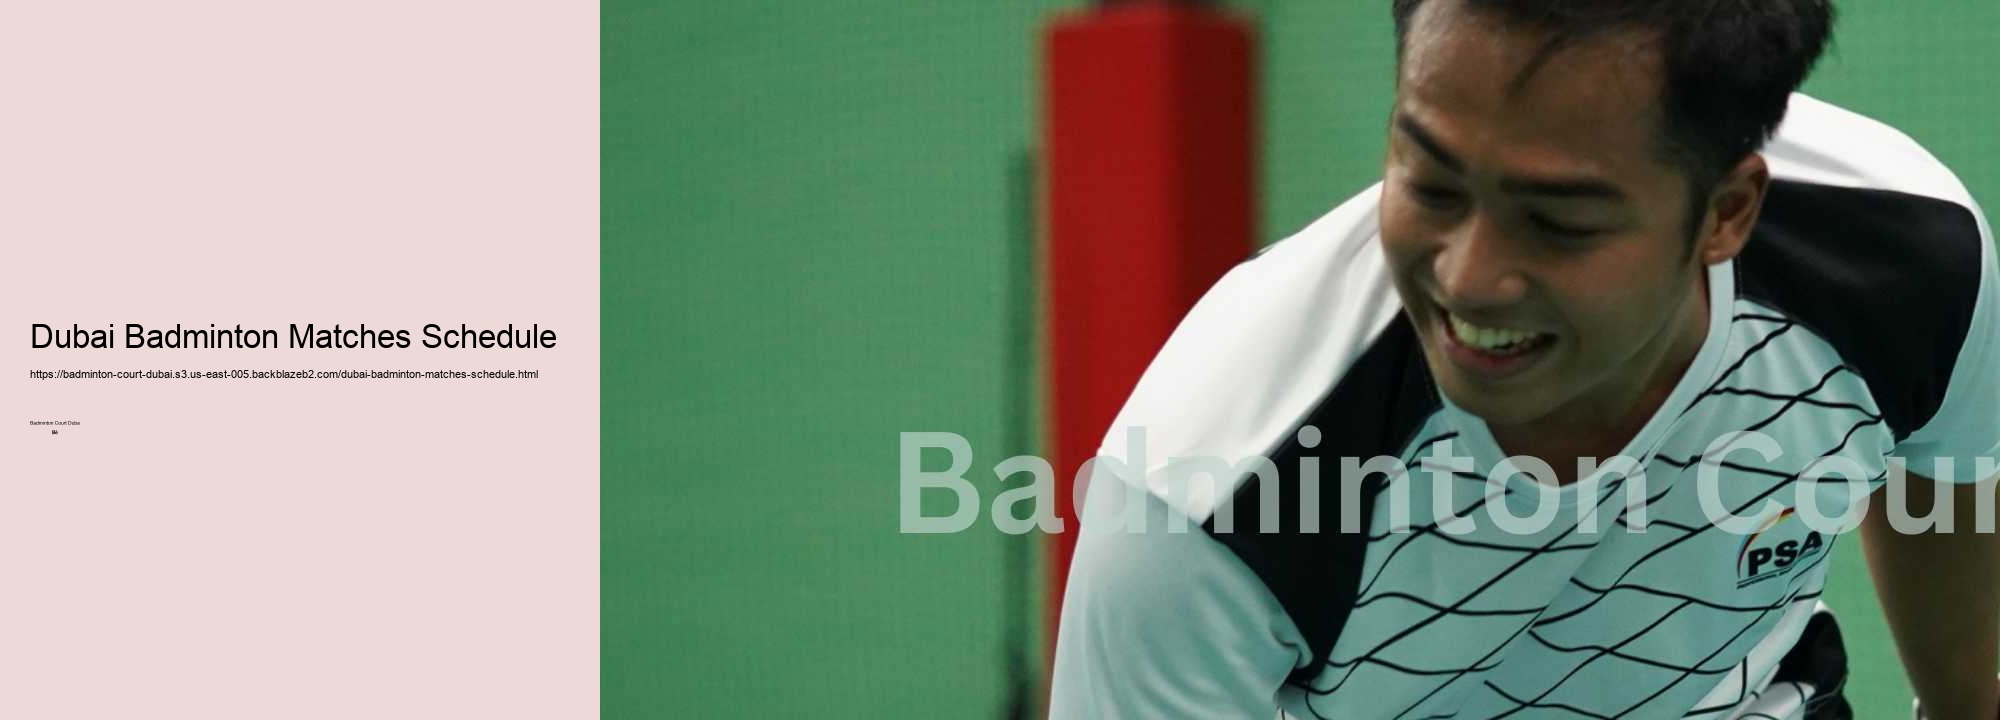 Dubai Badminton Matches Schedule